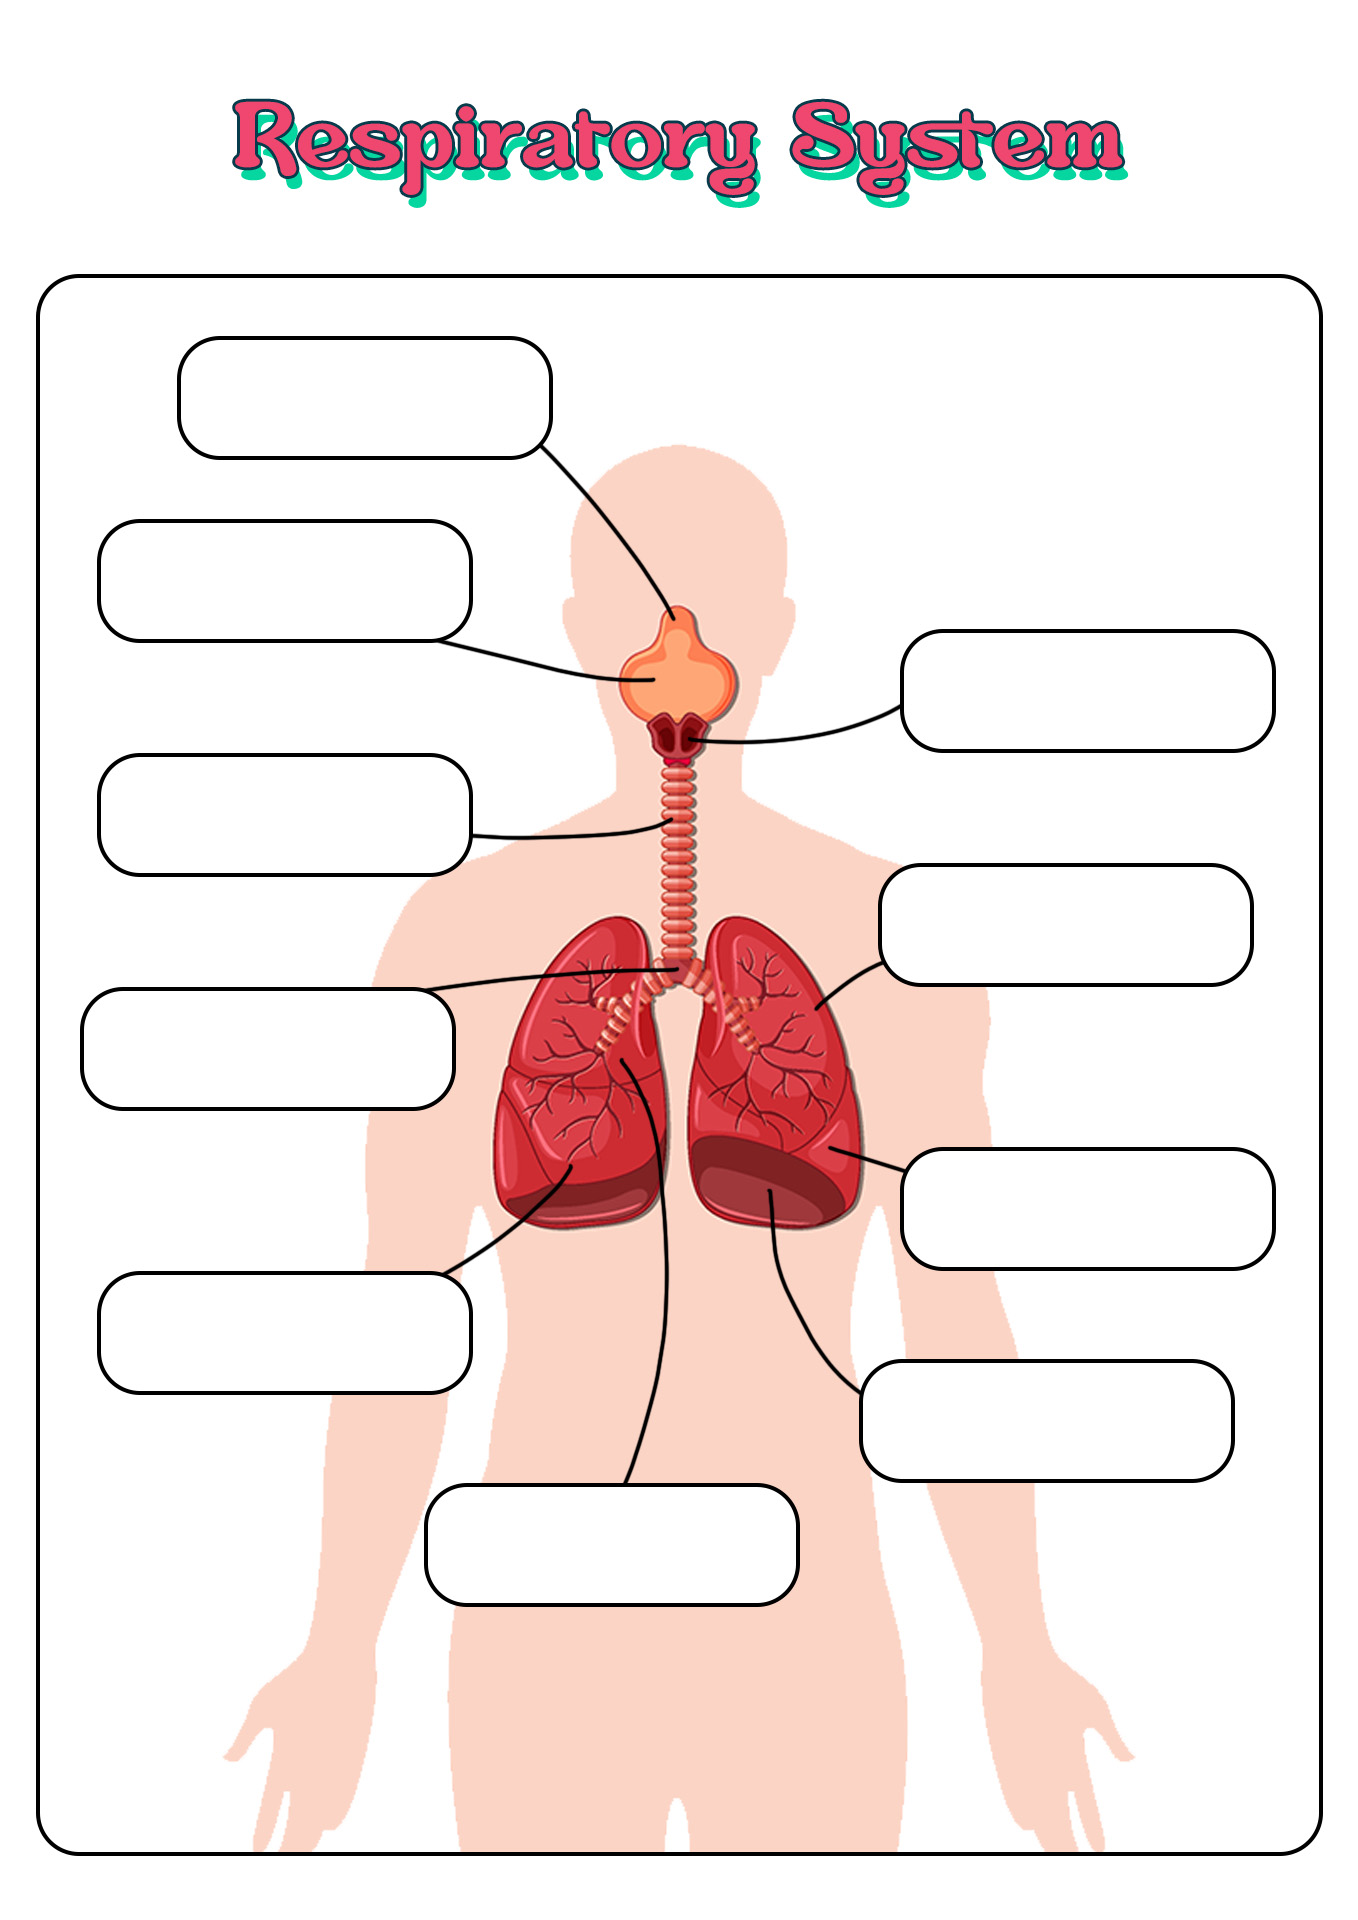 Respiratory System Blank Diagram Image